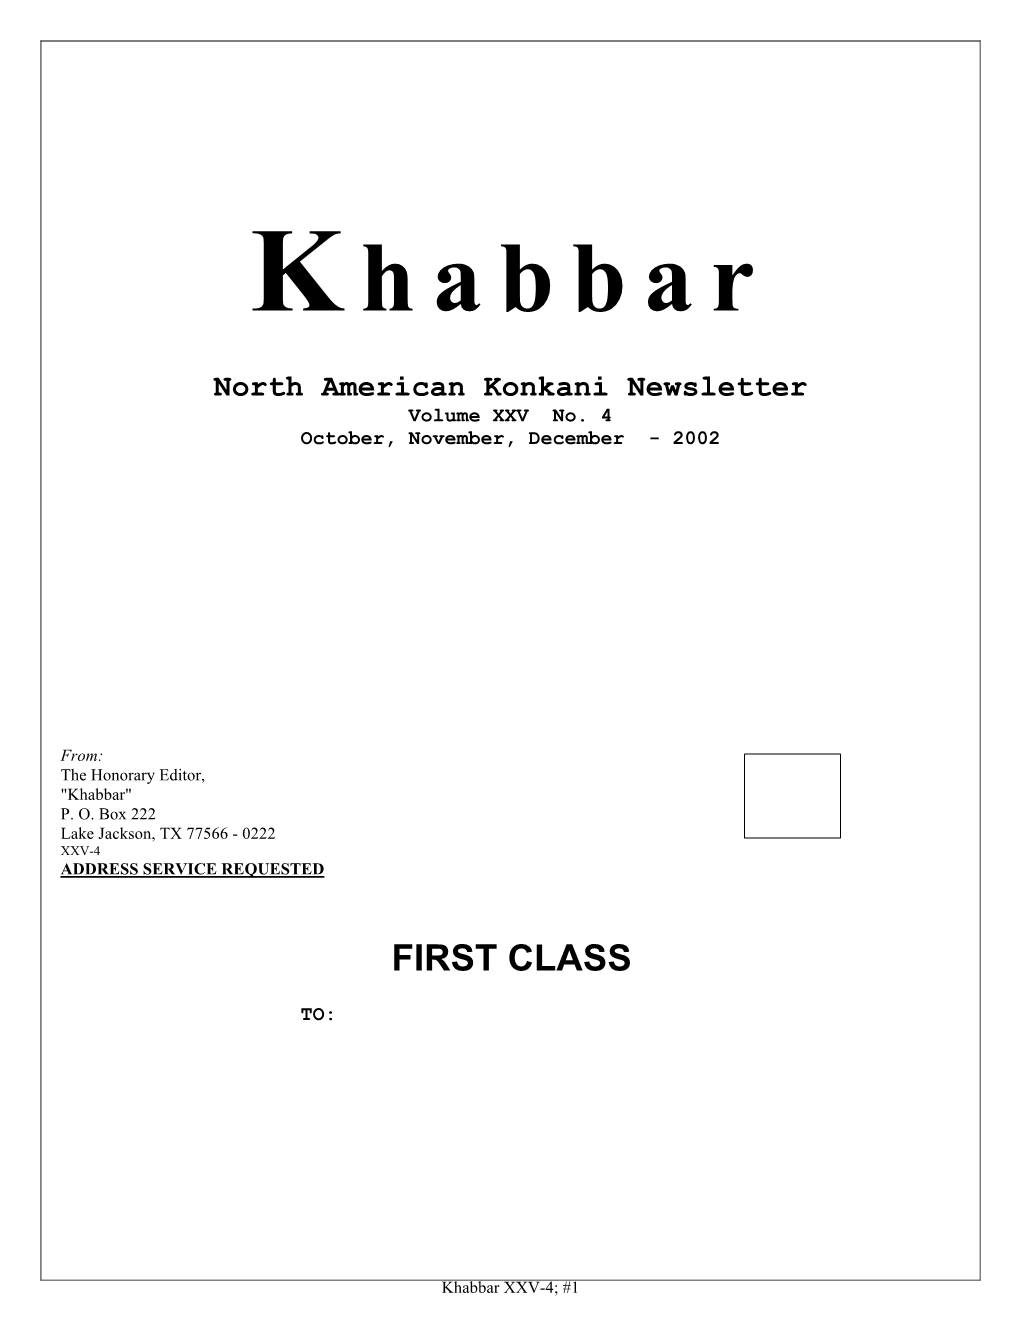 Khabbar Vol. XXV No. 4 (October, November, December